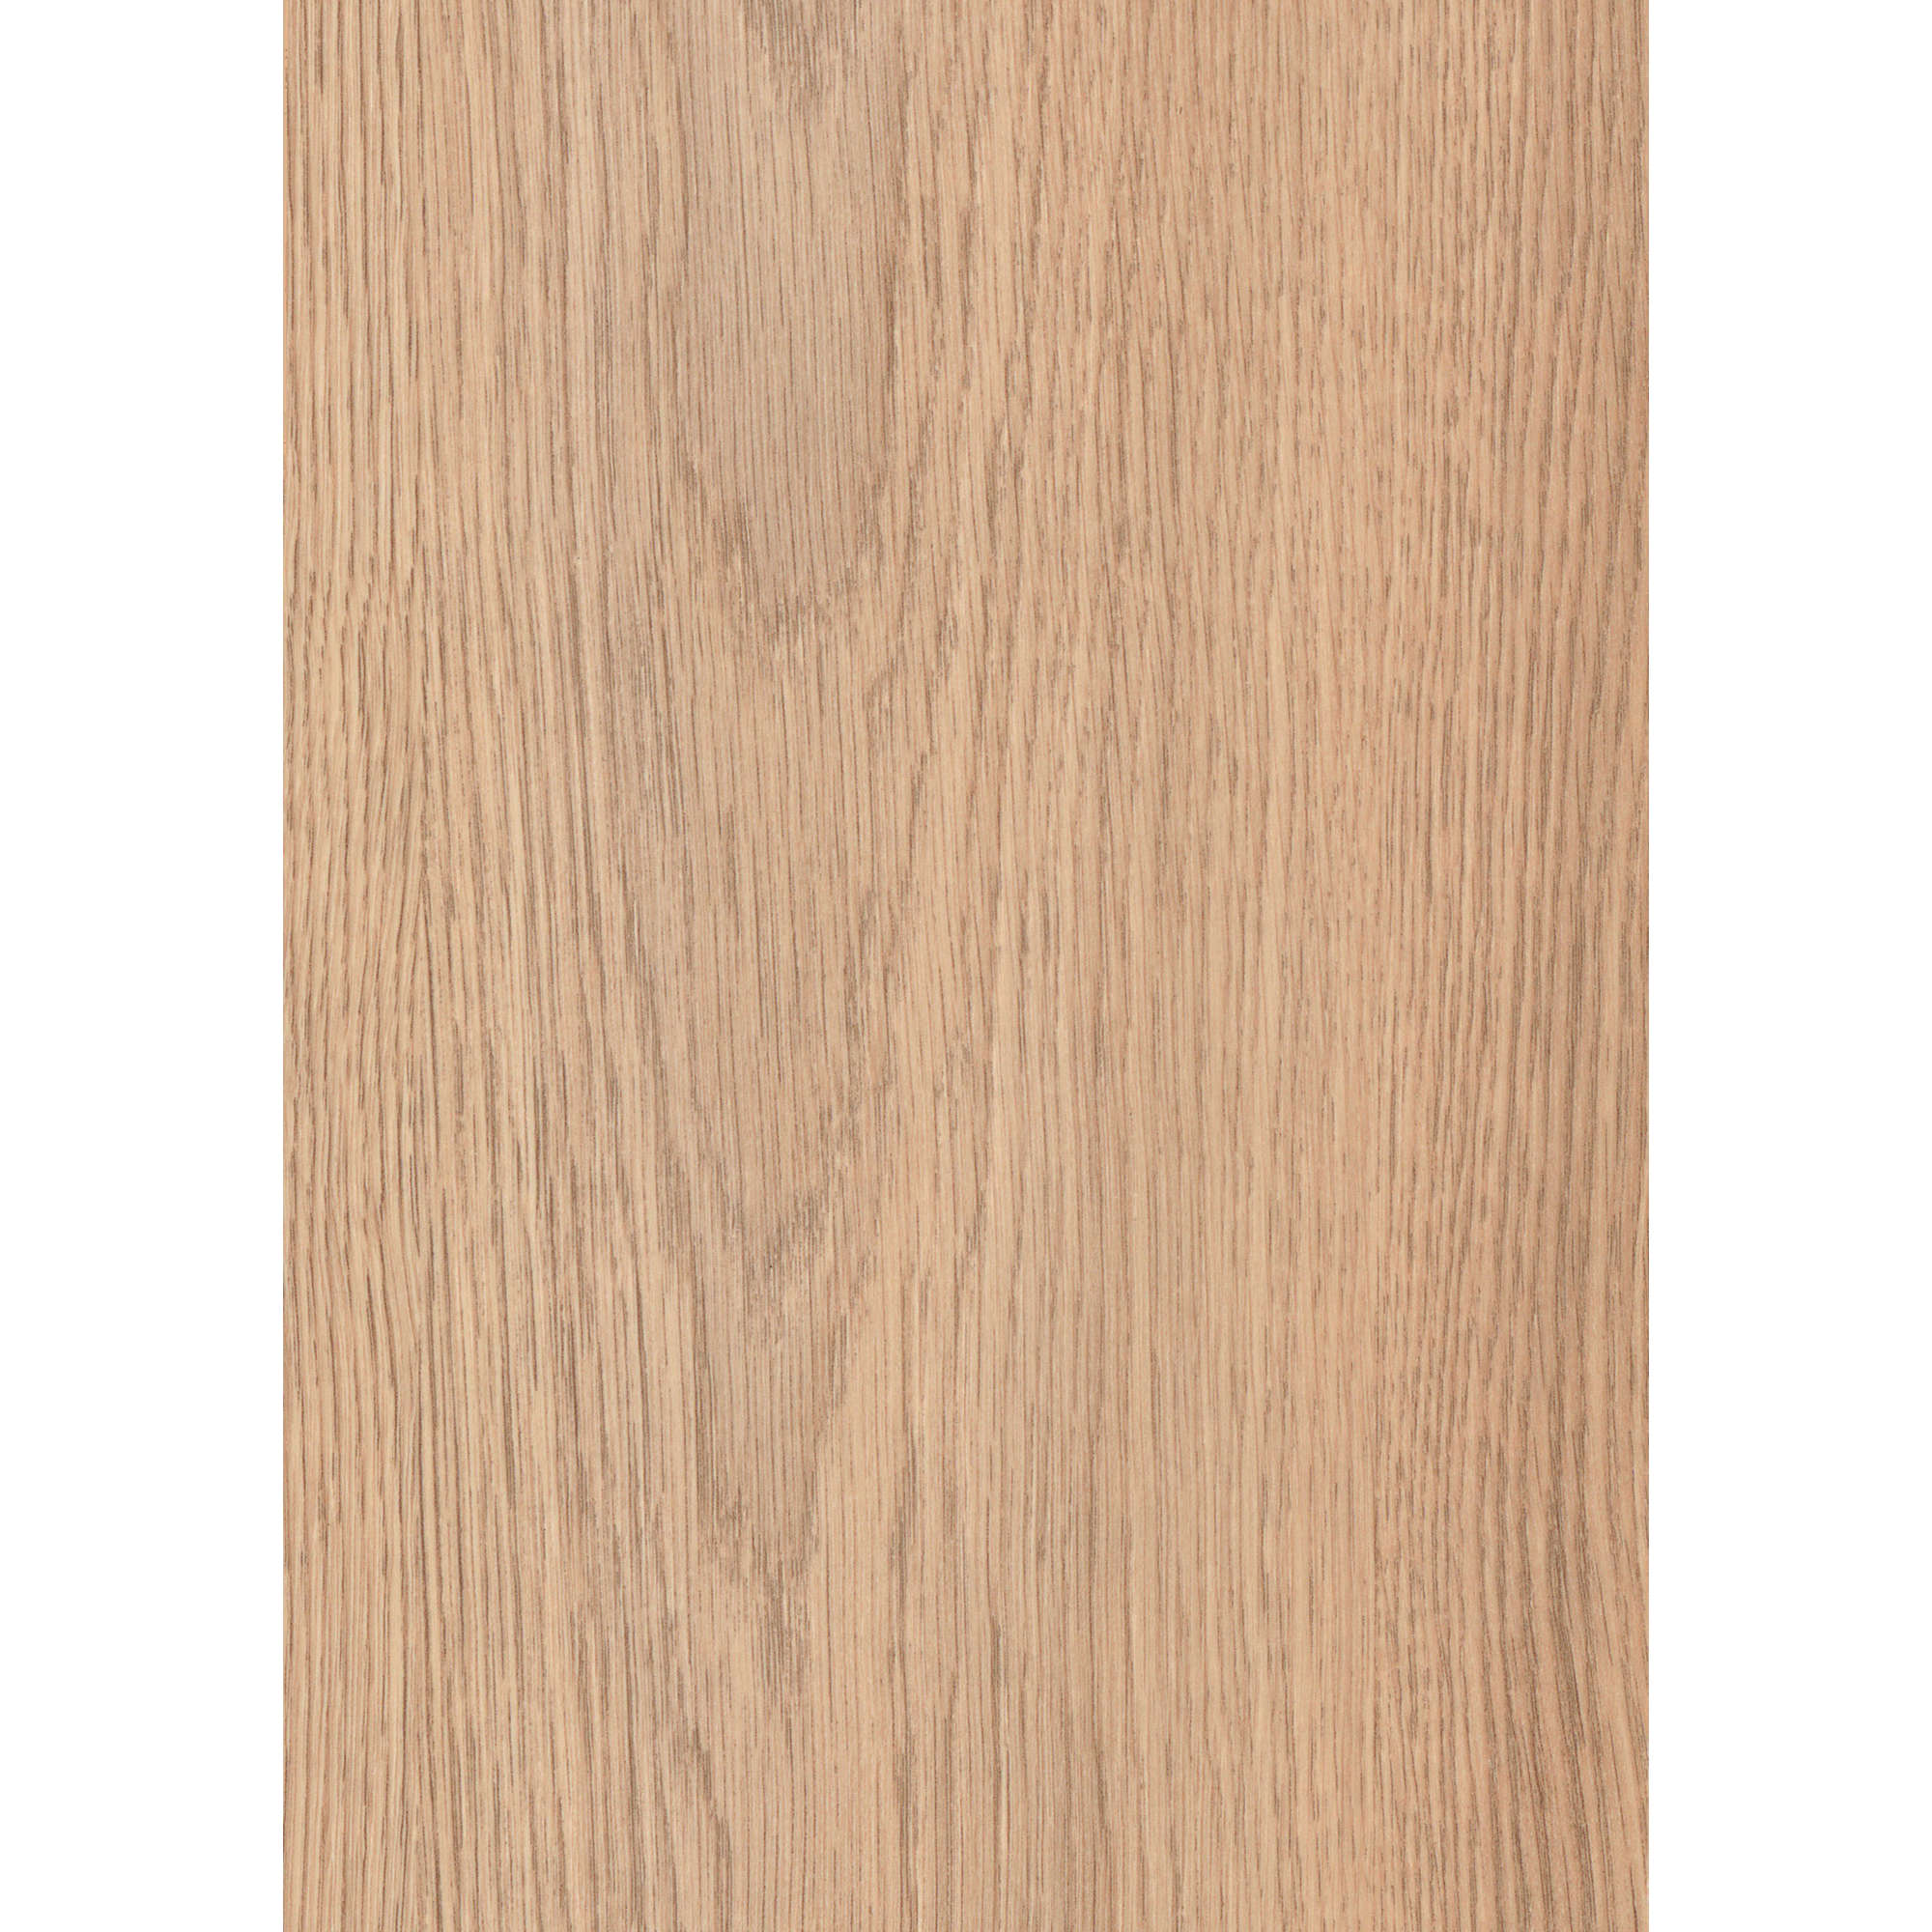 Laminat Nevada Oak braun 0,8 mm + product picture